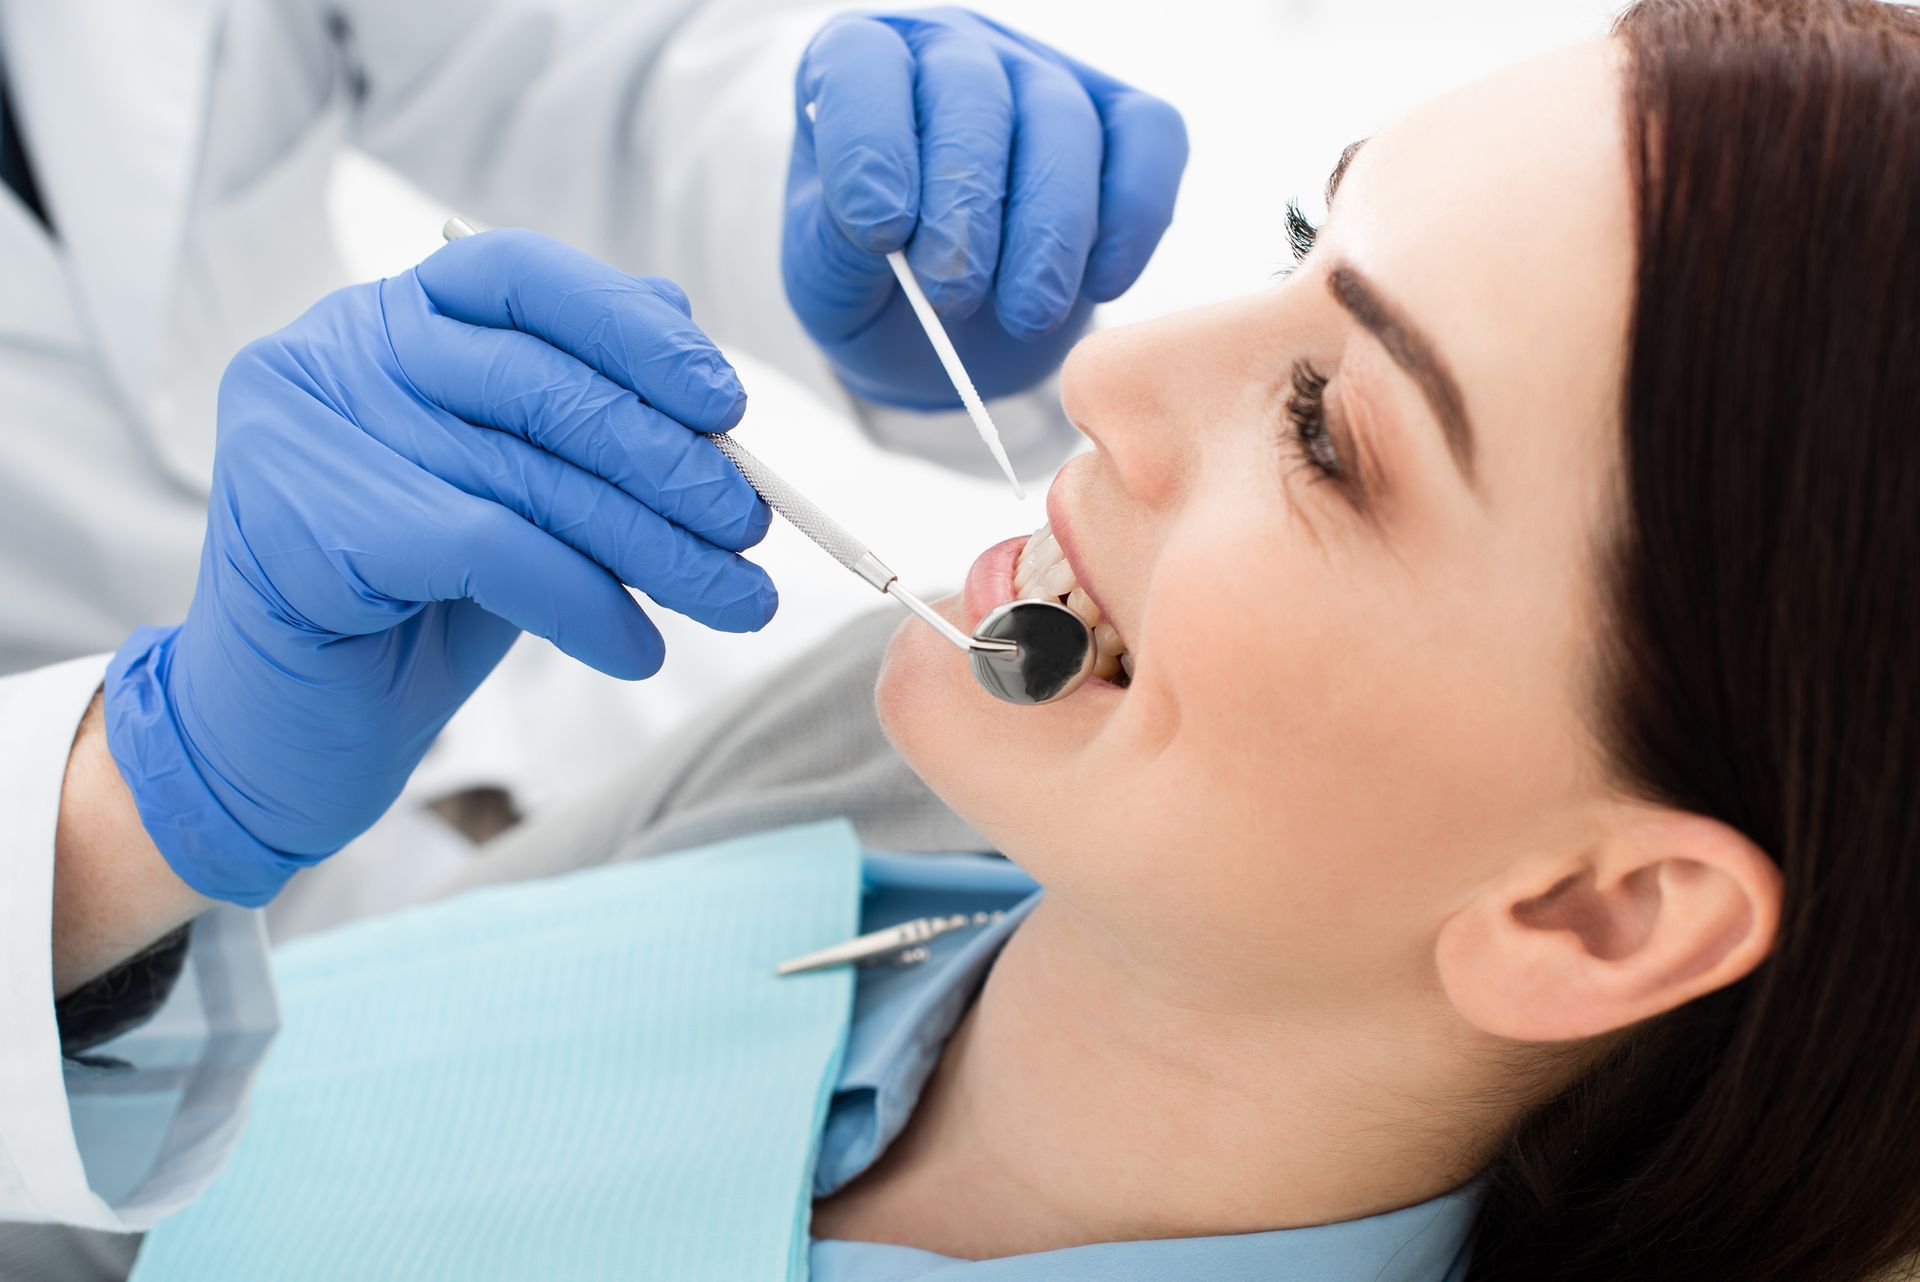 Emergency Dental Care & Treatments